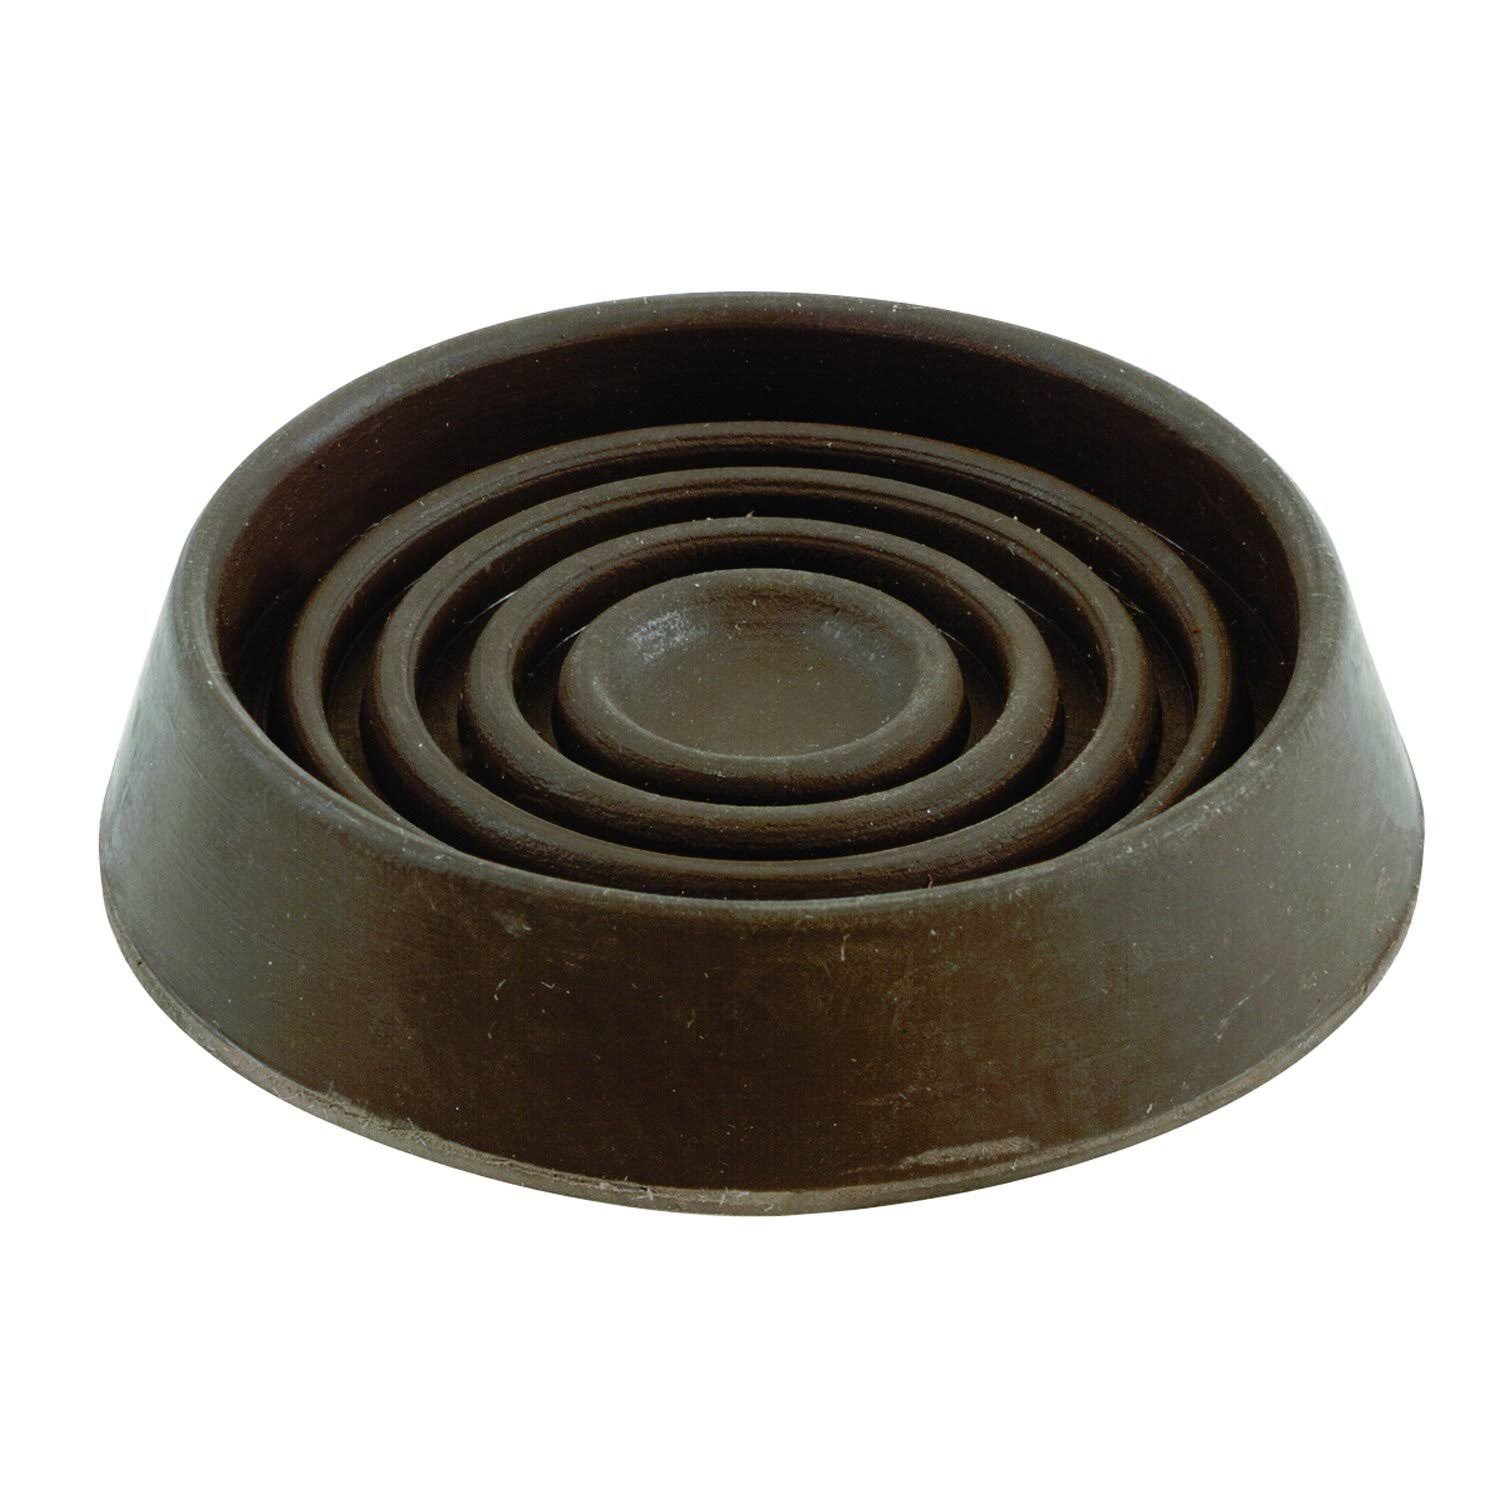 Shepherd Hardware 9067 Round Rubber Furniture Cups - Brown, 3", 2pk